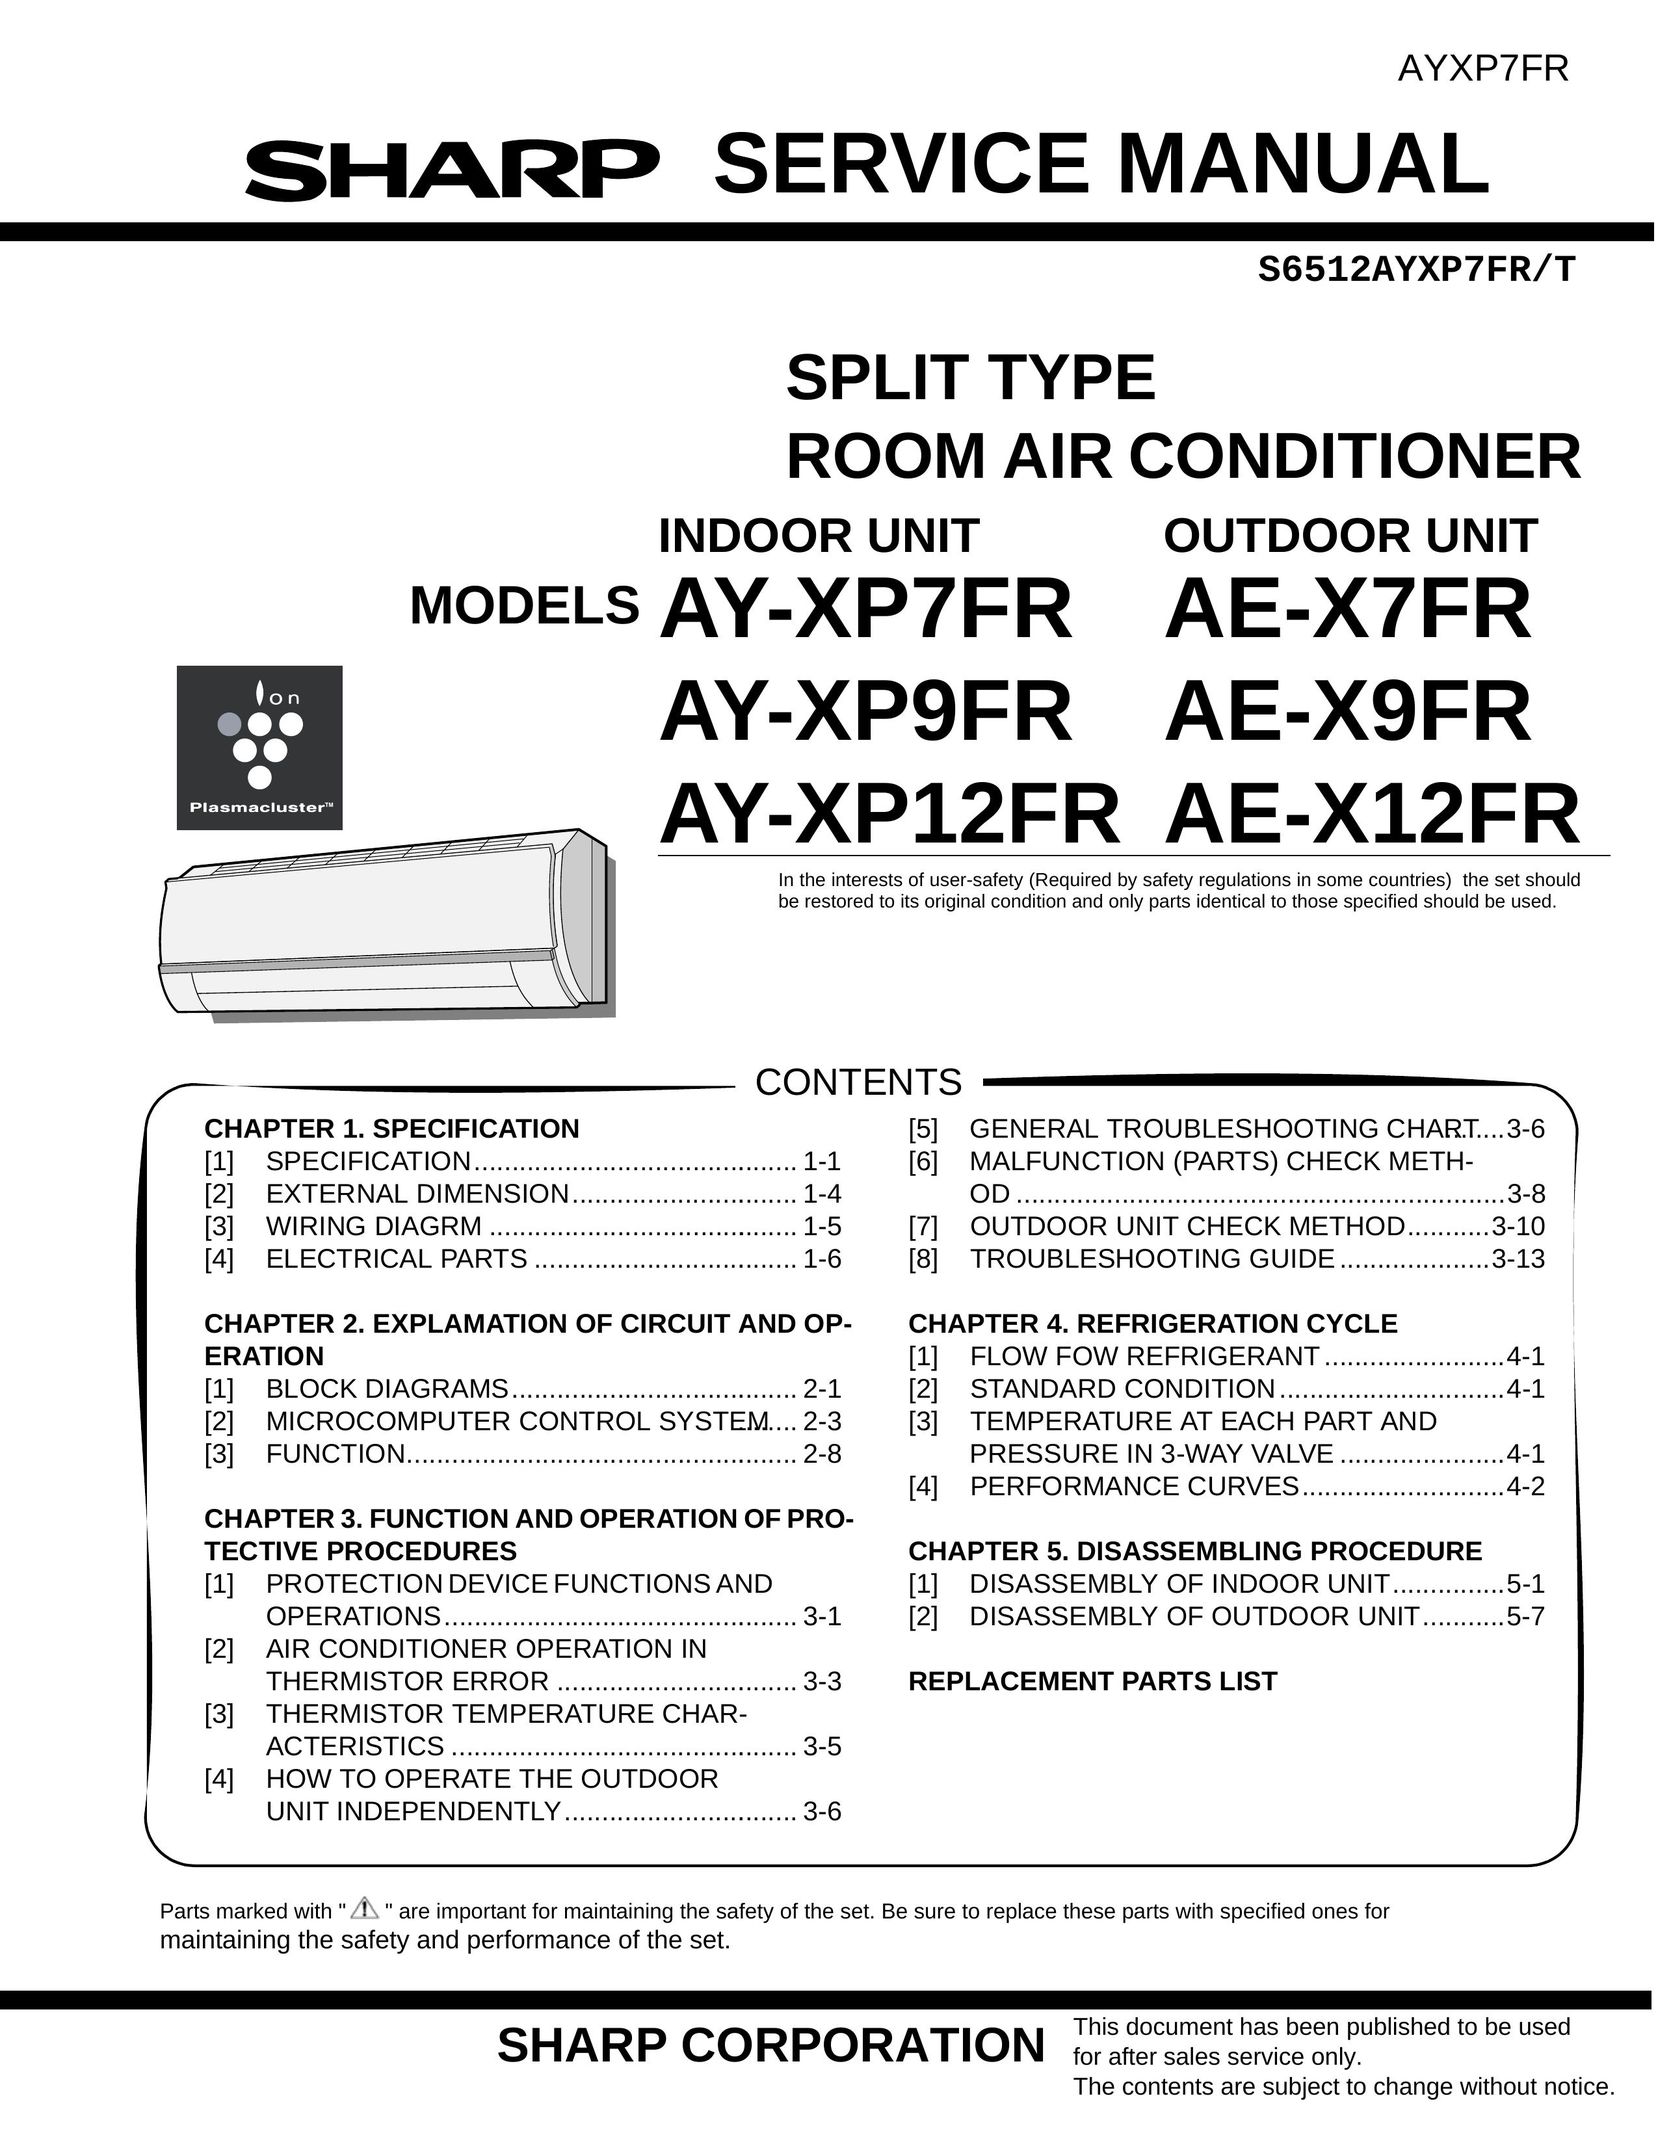 Sharp AE-X12FR Air Conditioner User Manual